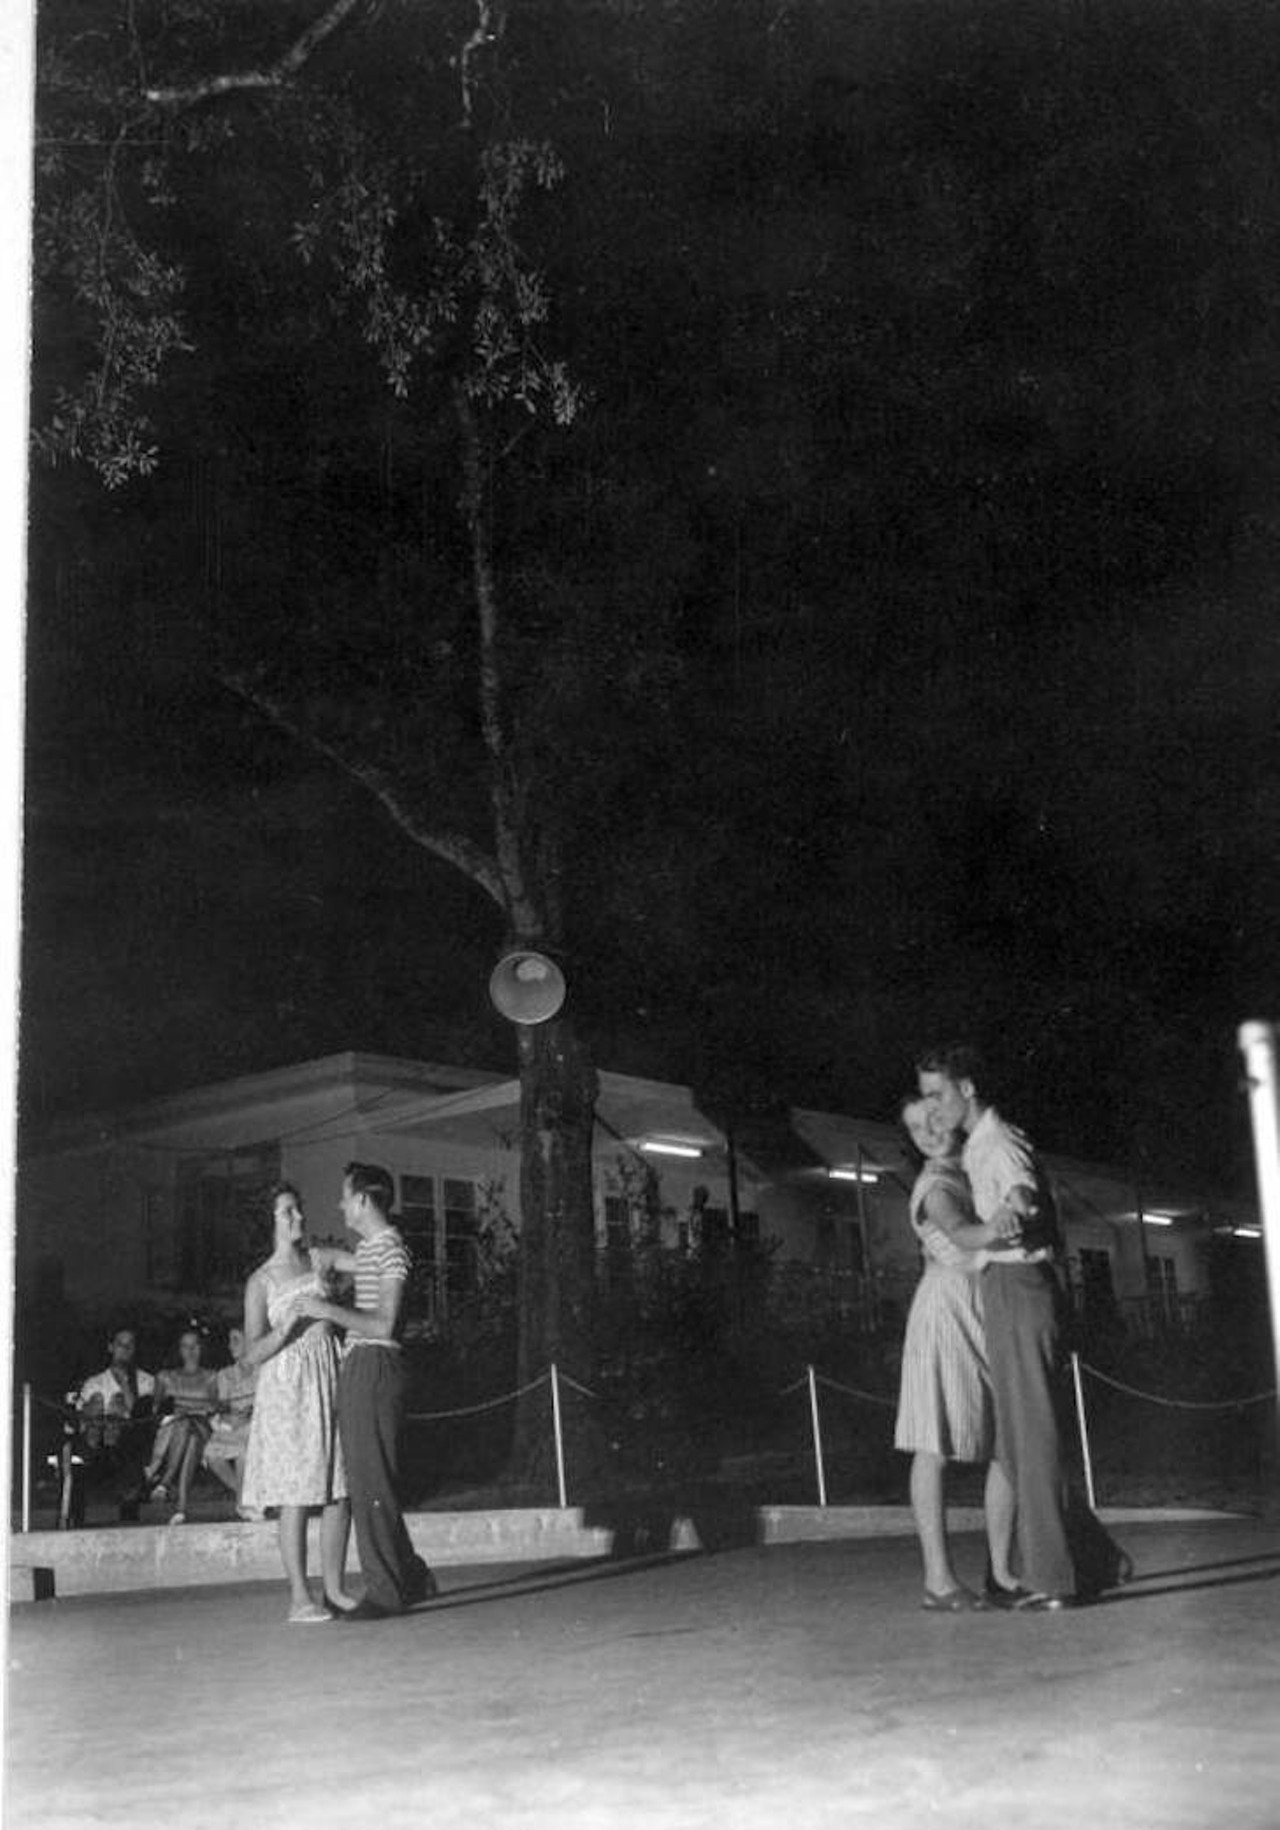 Dancers enjoy the night - Sanlando Springs, 1946.